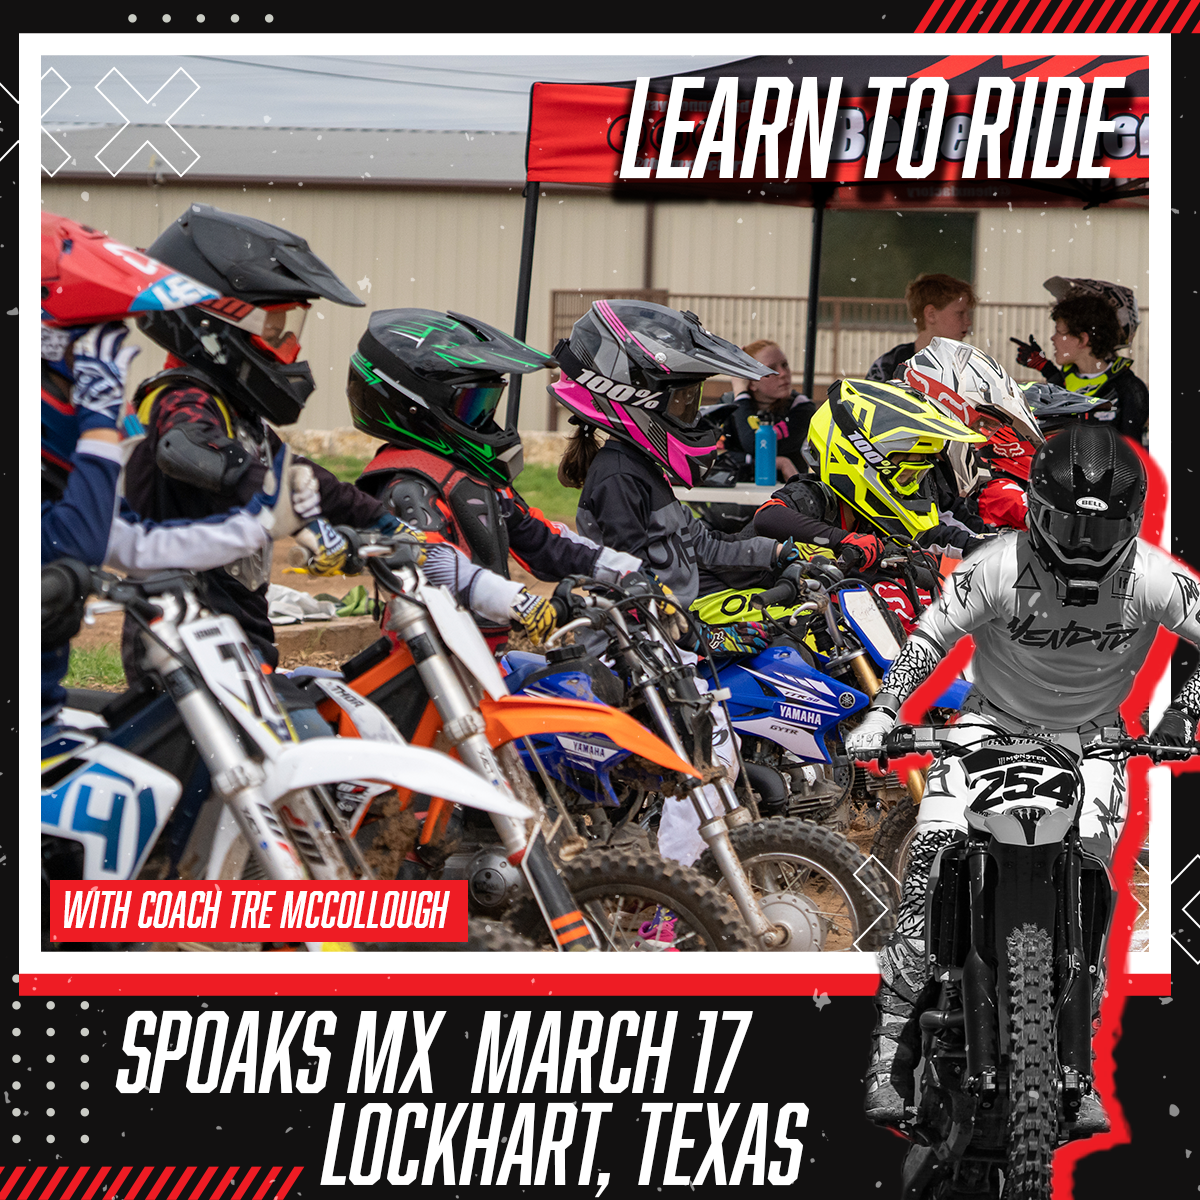 LearnToRide: Lockhart, Texas | March 17